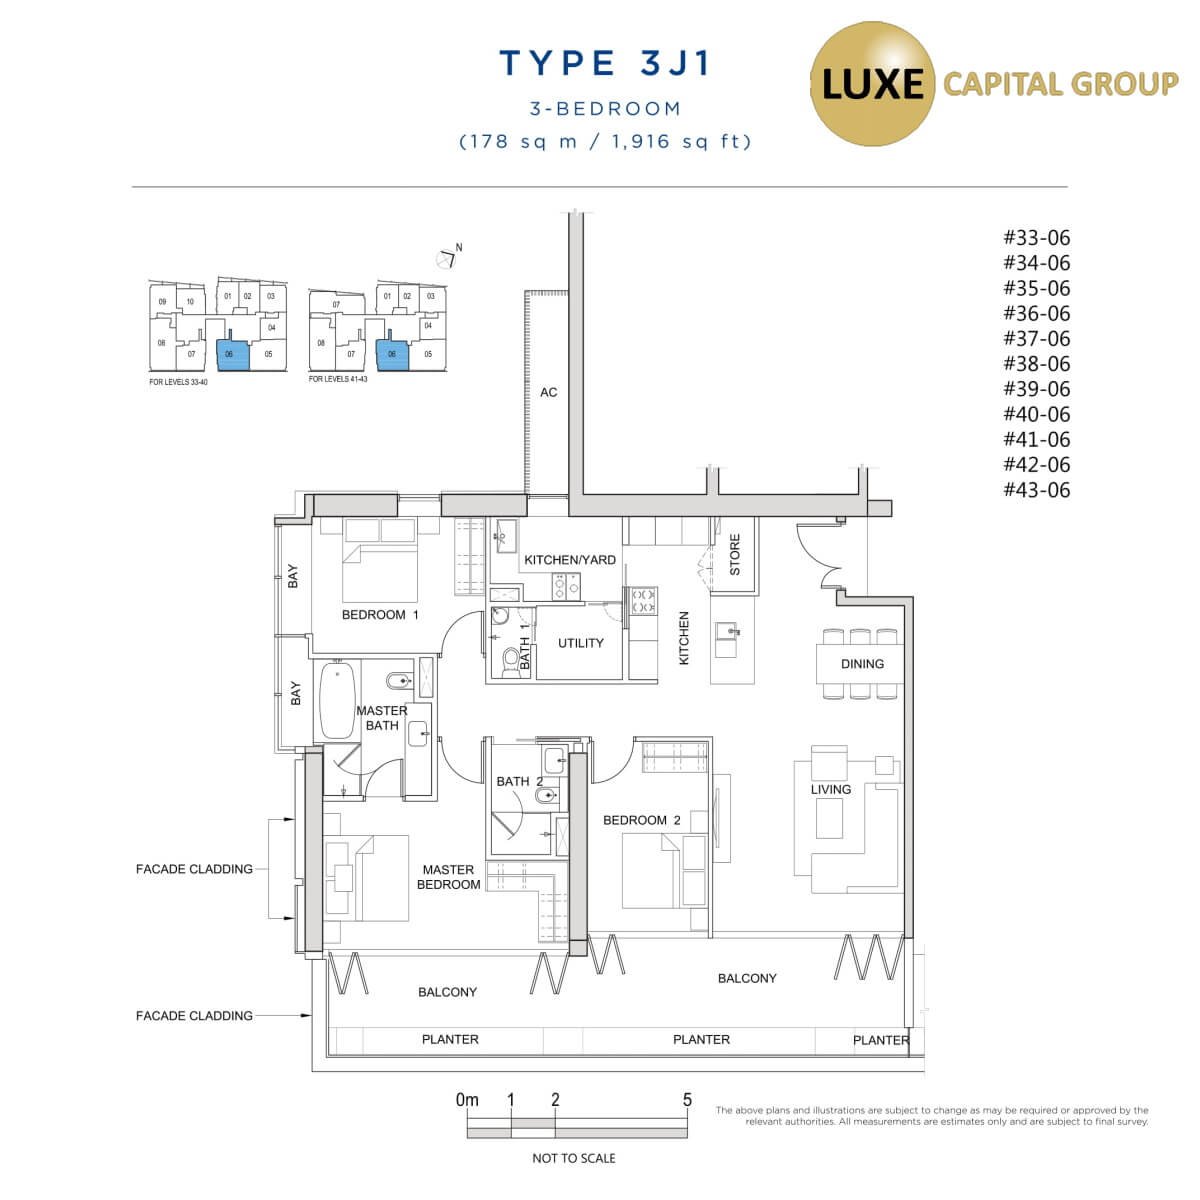 South Beach Residences Floorplan - Type 3J1 - 3 BR